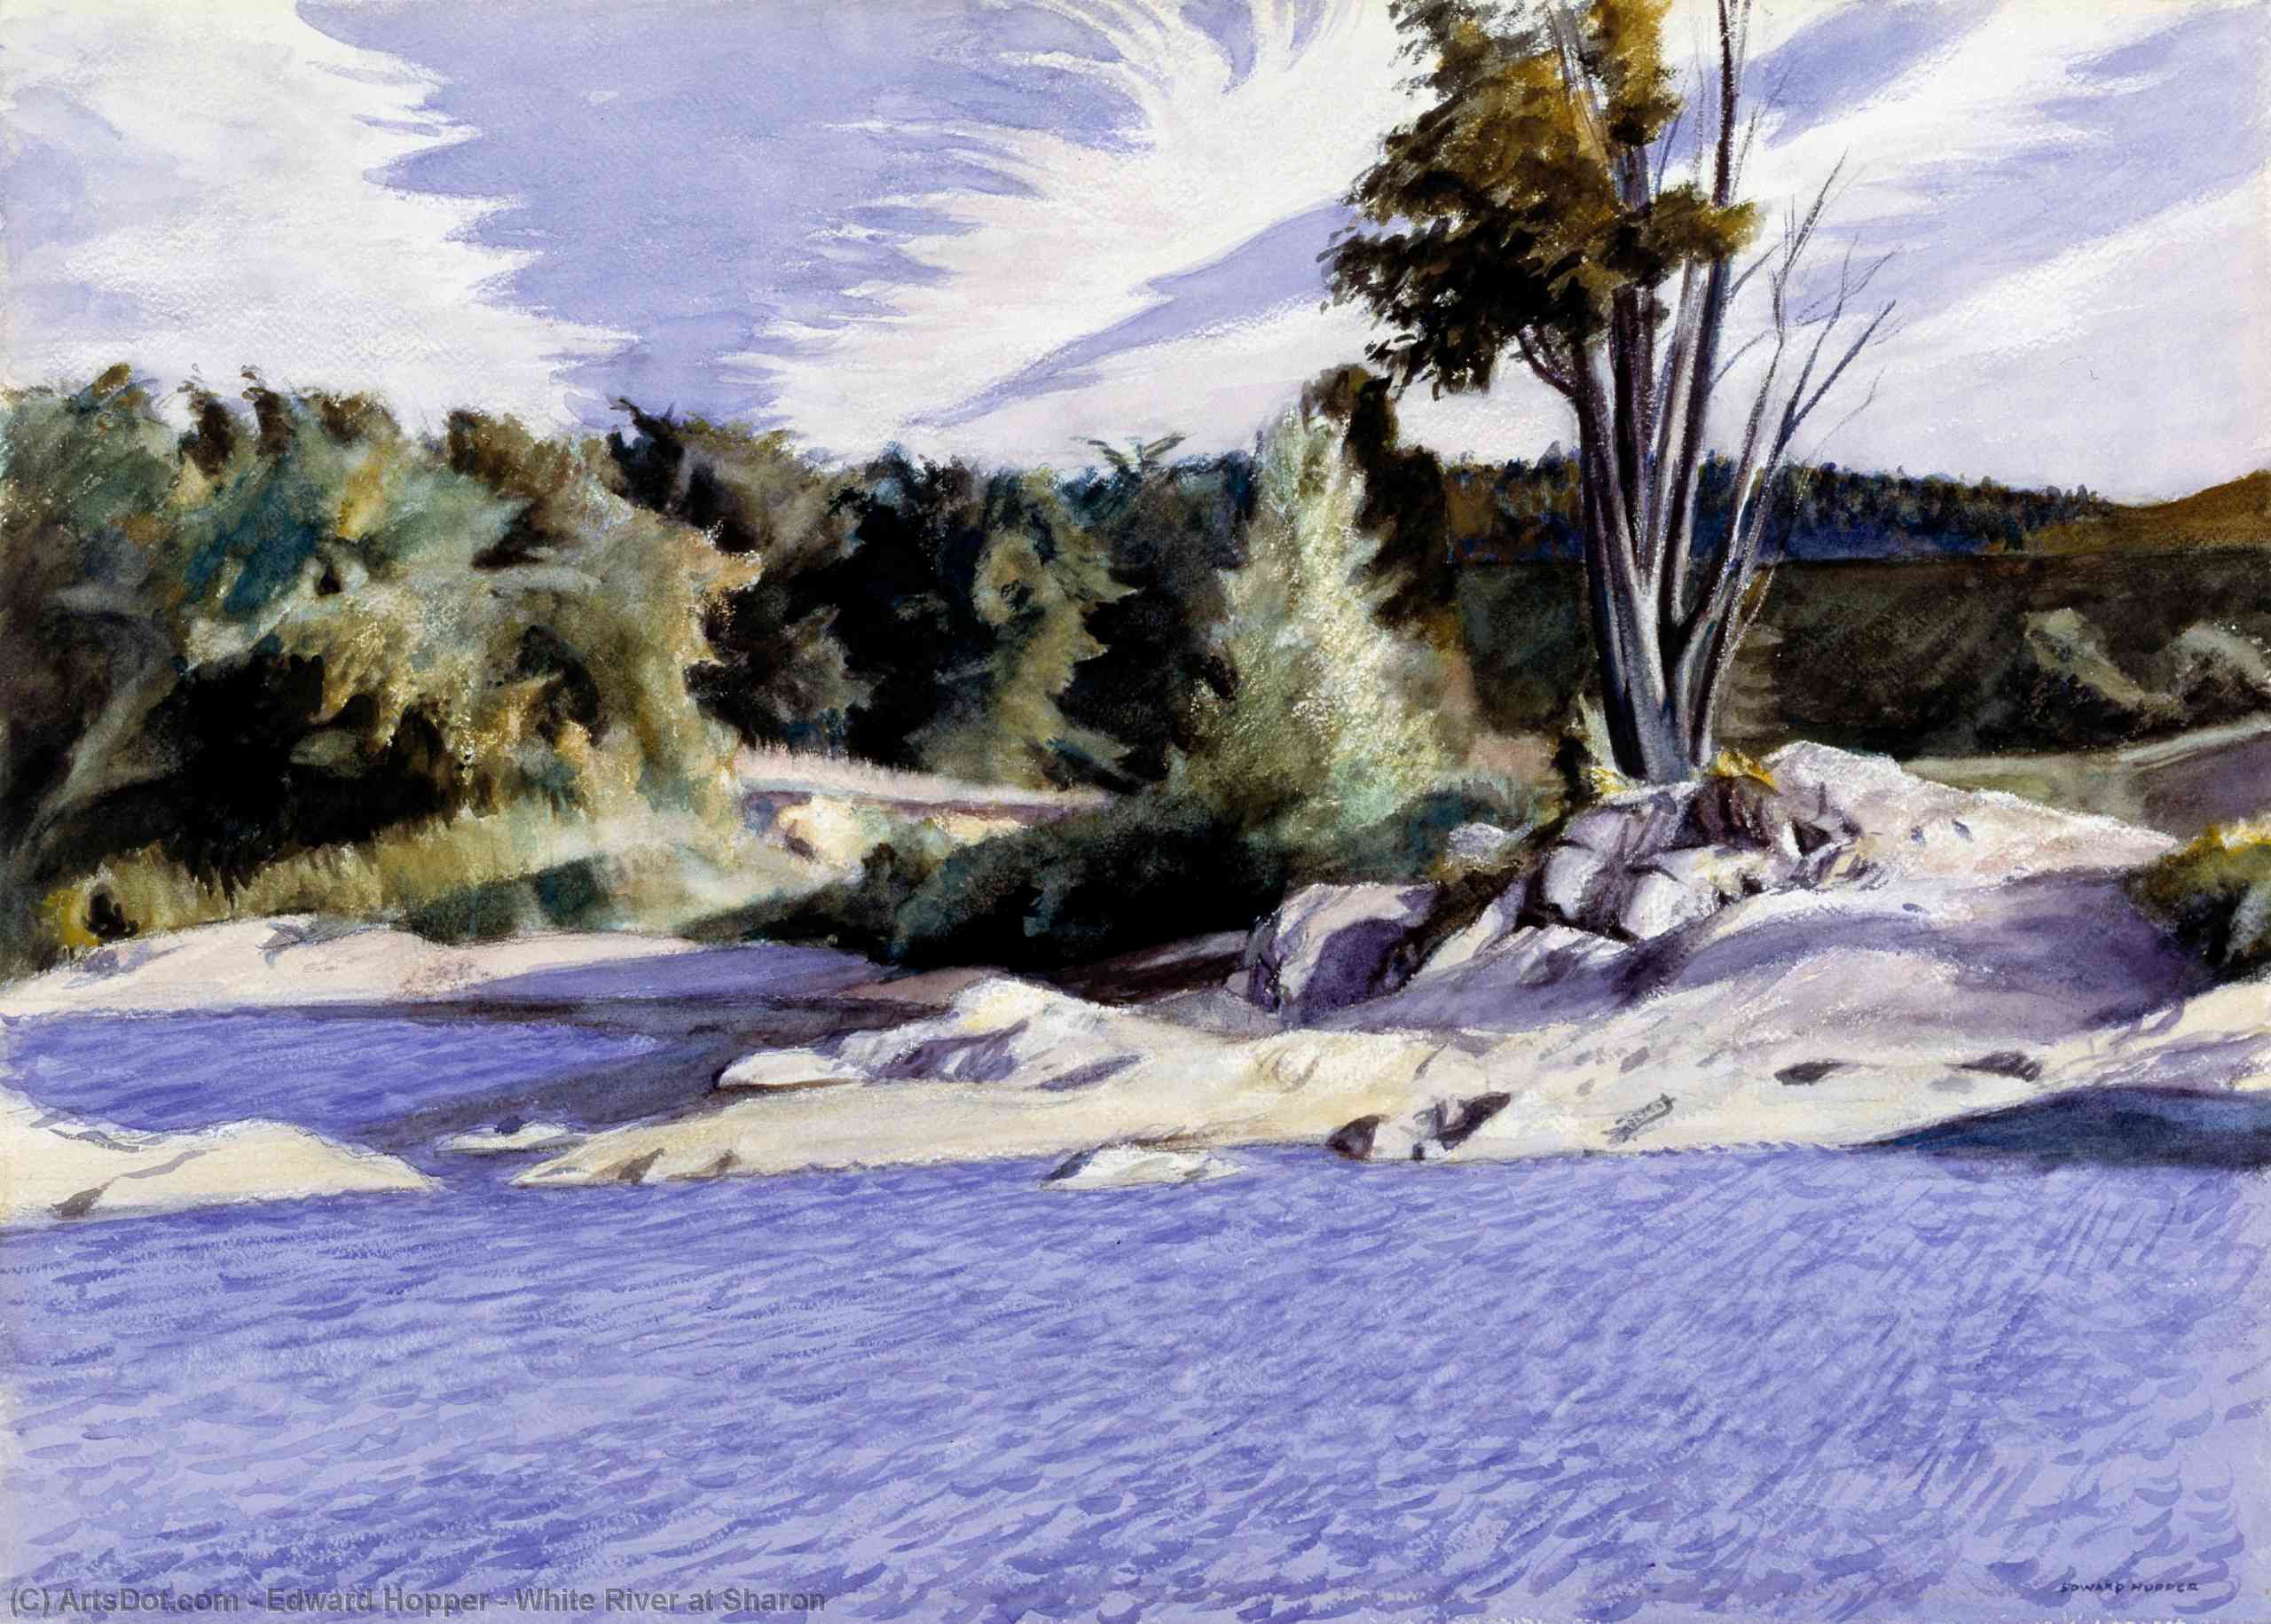 WikiOO.org - Εγκυκλοπαίδεια Καλών Τεχνών - Ζωγραφική, έργα τέχνης Edward Hopper - White River at Sharon